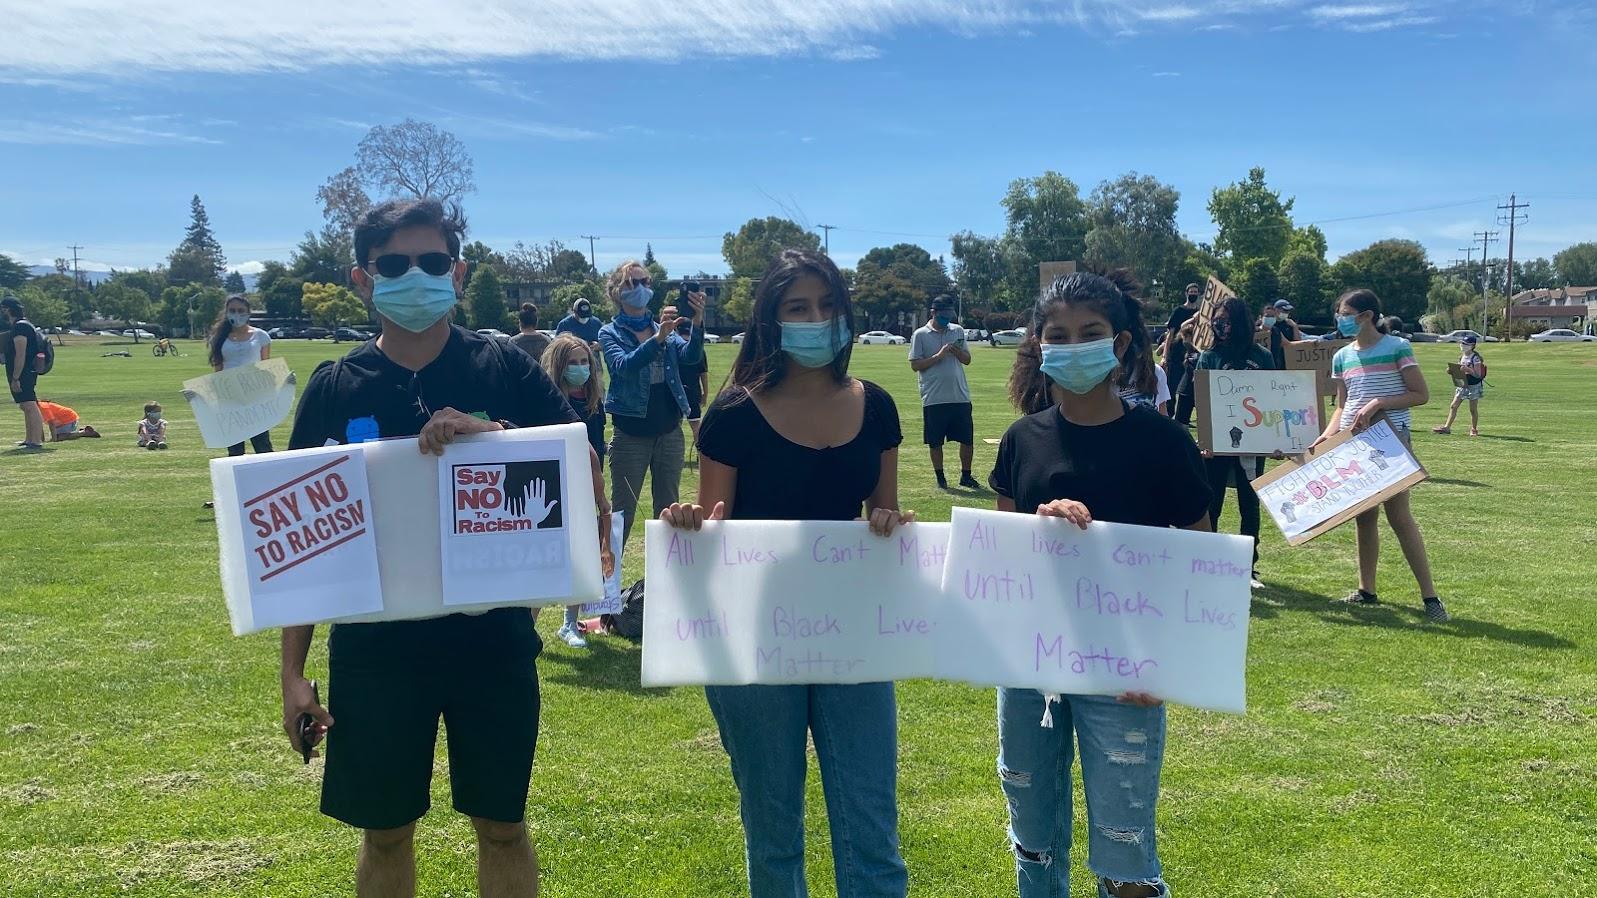 Nilesh Junnarkar, left, Esha Junnarkar, center, and Anushka Junnarkar take part in a racial justice protest organized by Indian American groups in Palo Alto, California, on June 5, 2020.